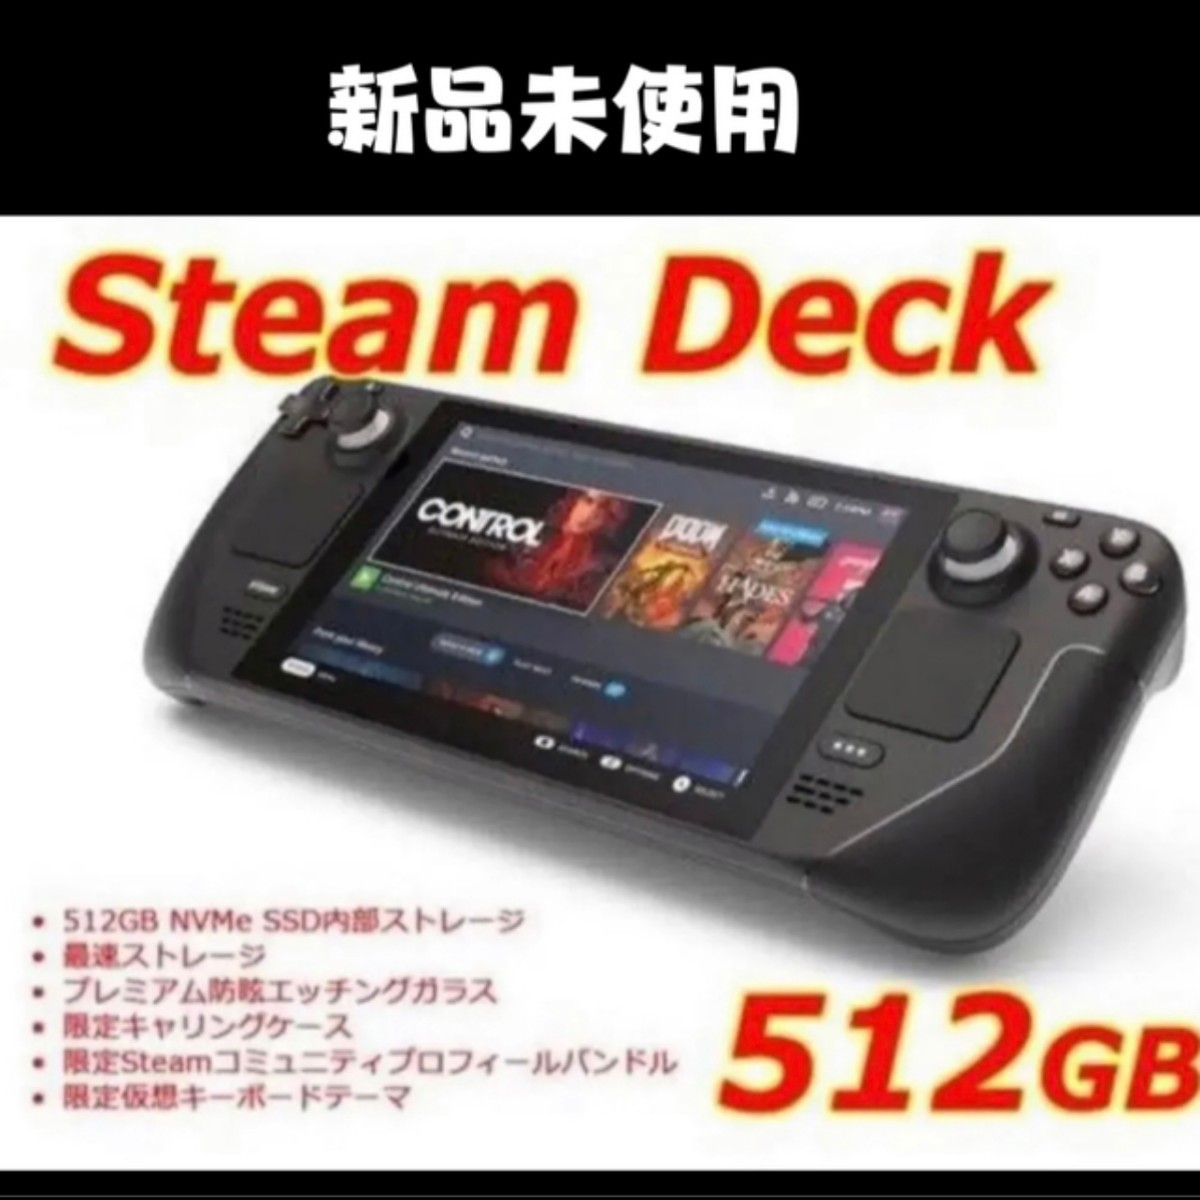 ≪SALE＆送料無料≫ Steam Deck 512GB STEAM 日本版 512GB 正規品 新品